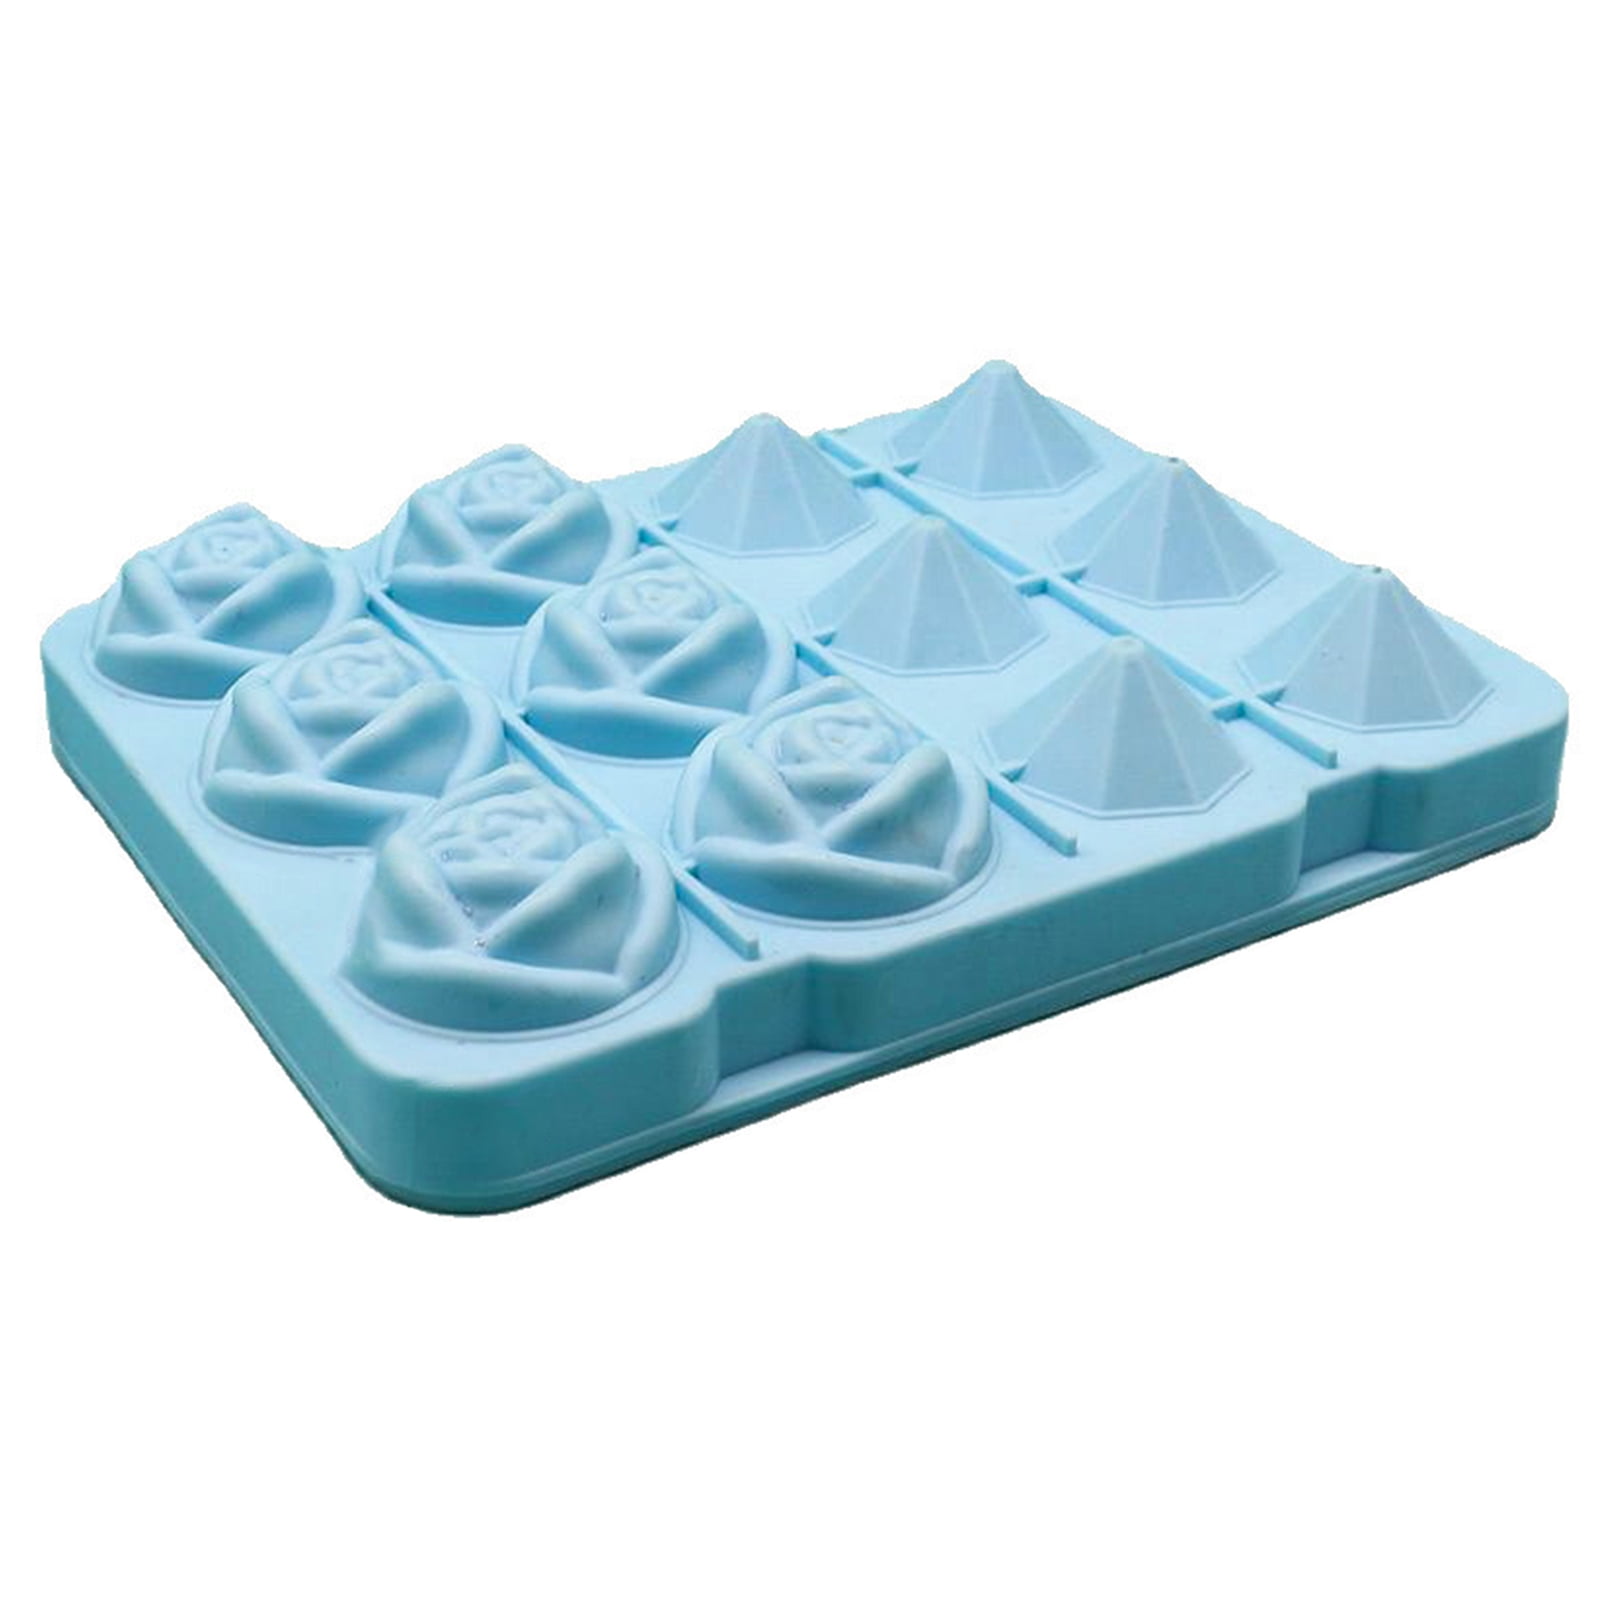 Bobasndm Diamond Rose Ice Mold & Large Ice Cube Trays,12 Cavities